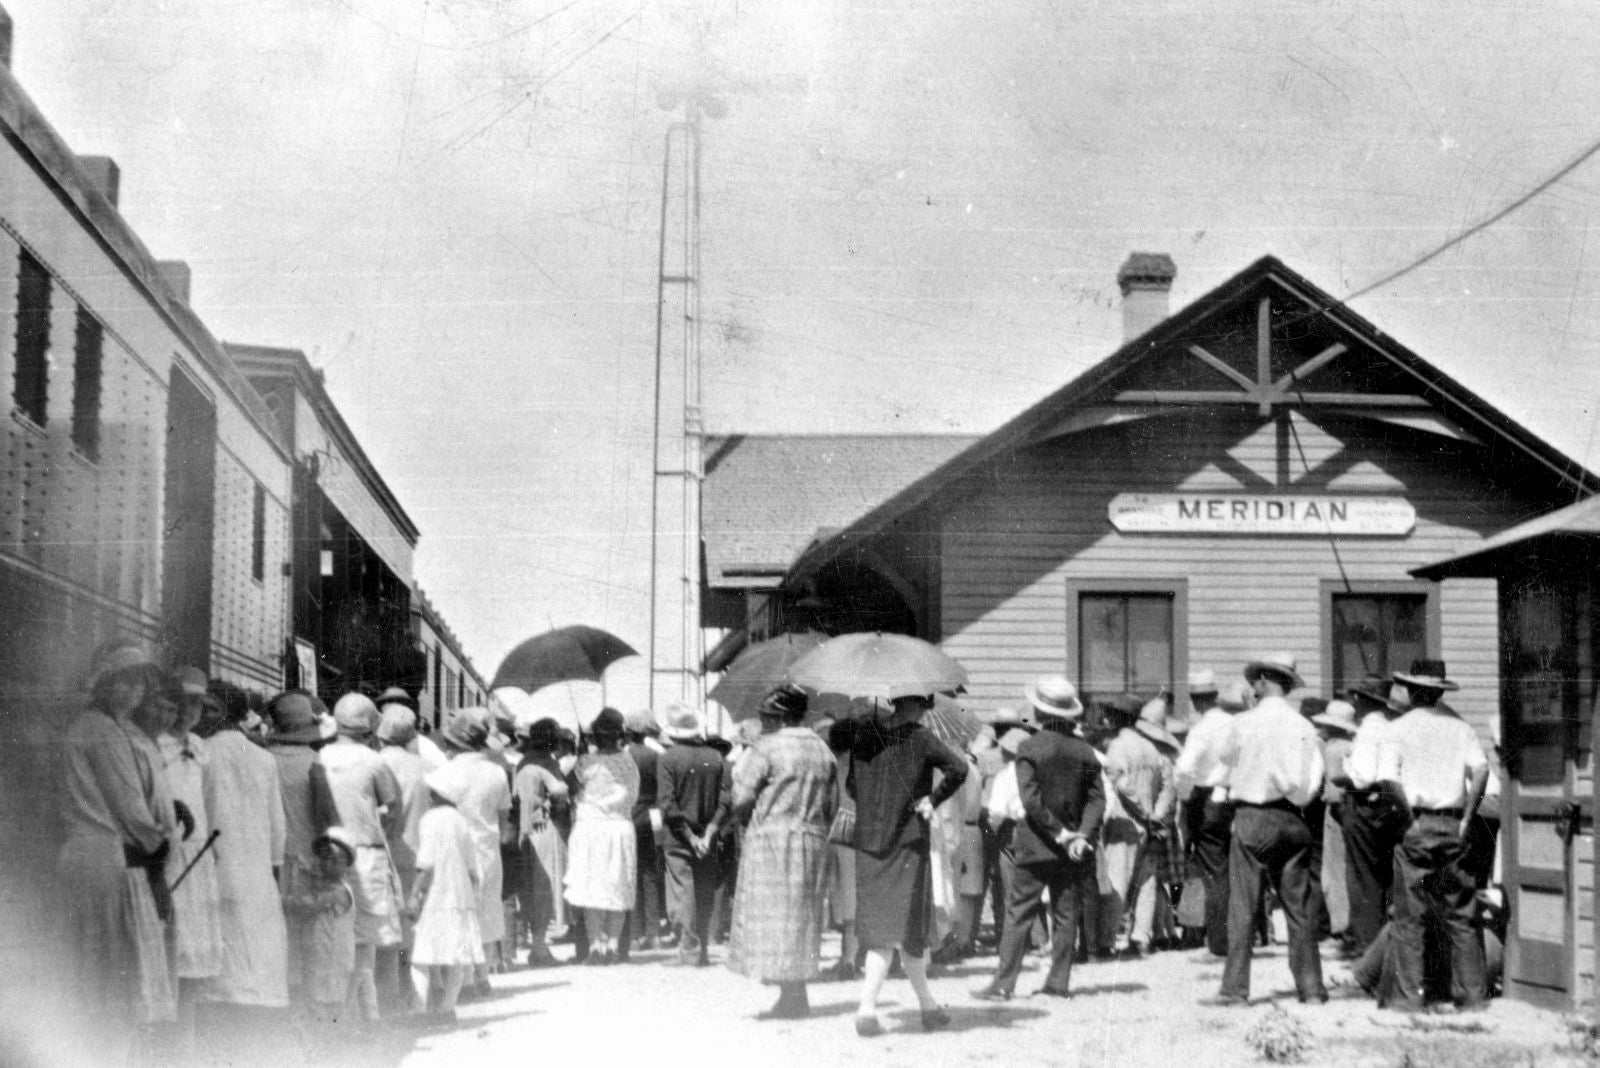 Meridian Railroad Station (1920-1930)